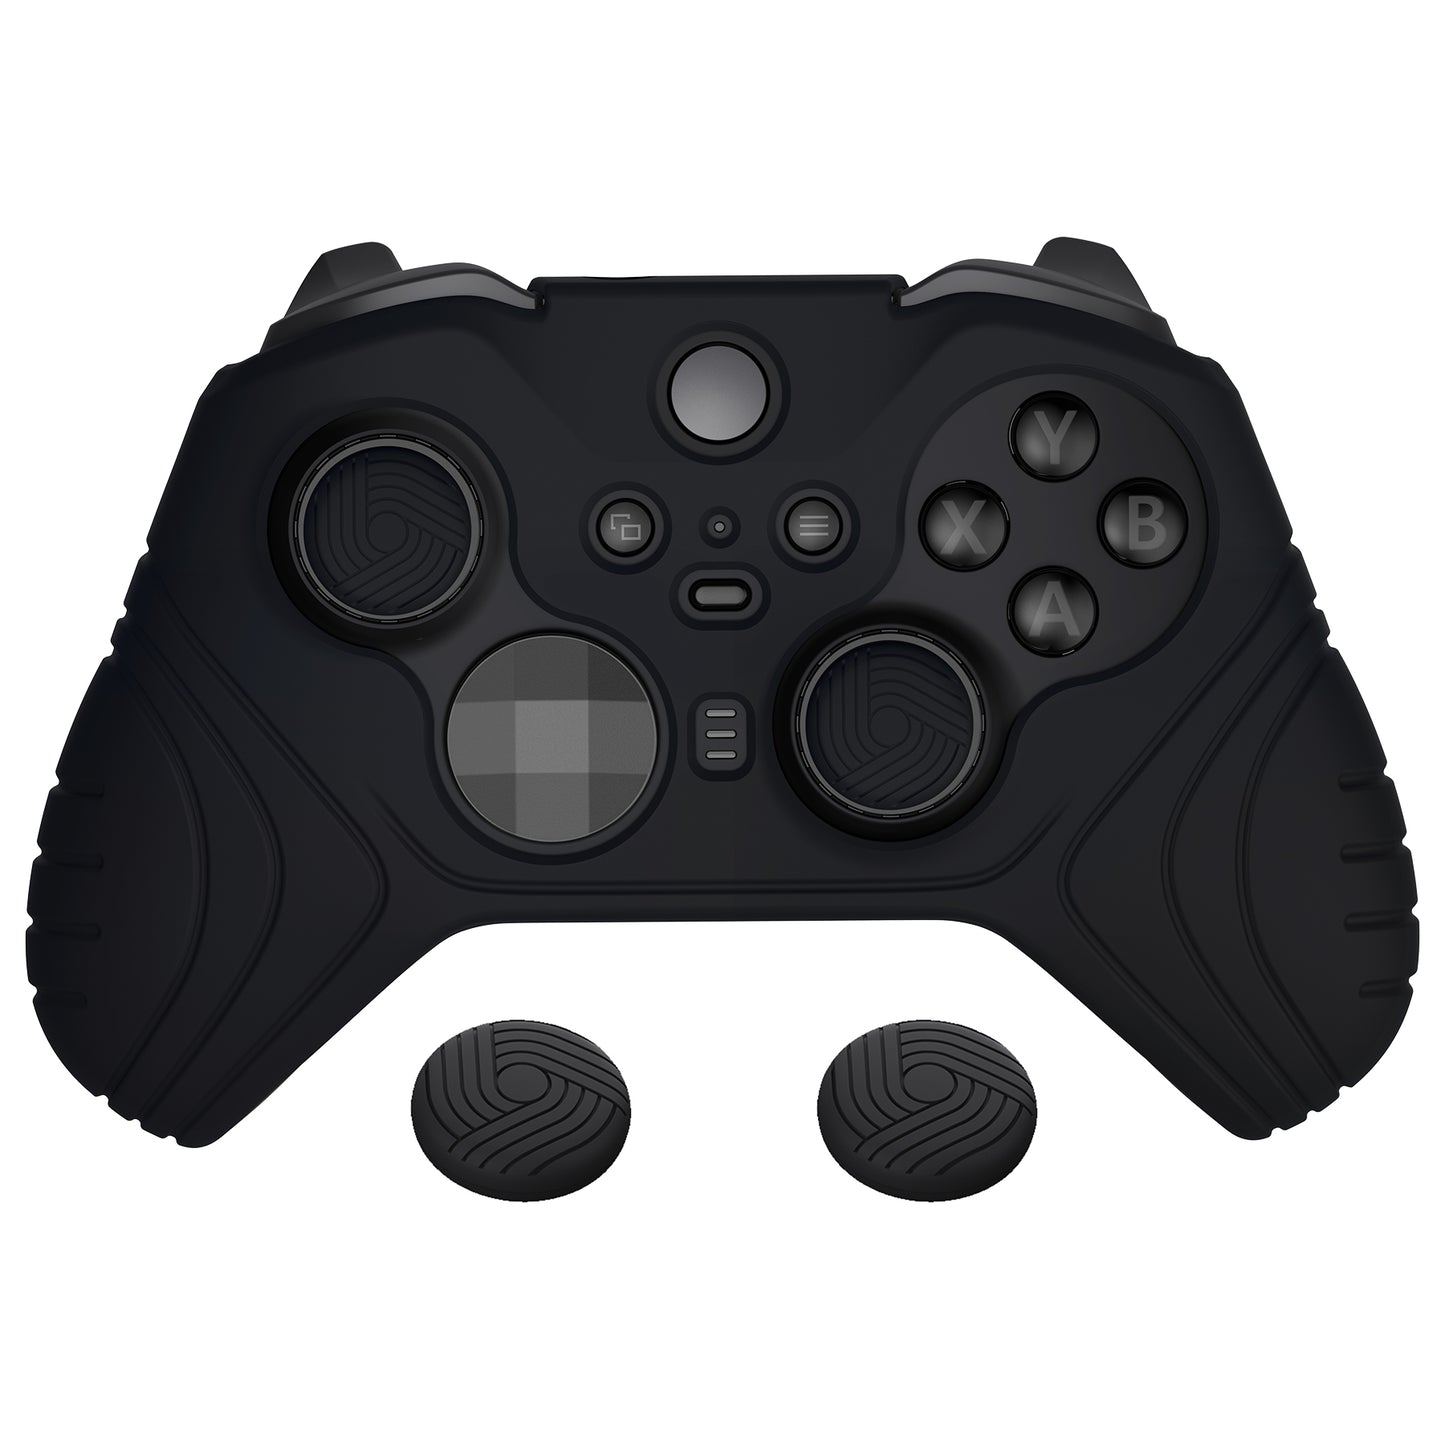 Under Control - Casque Gaming Pro Spirit pour Xbox One - Series X